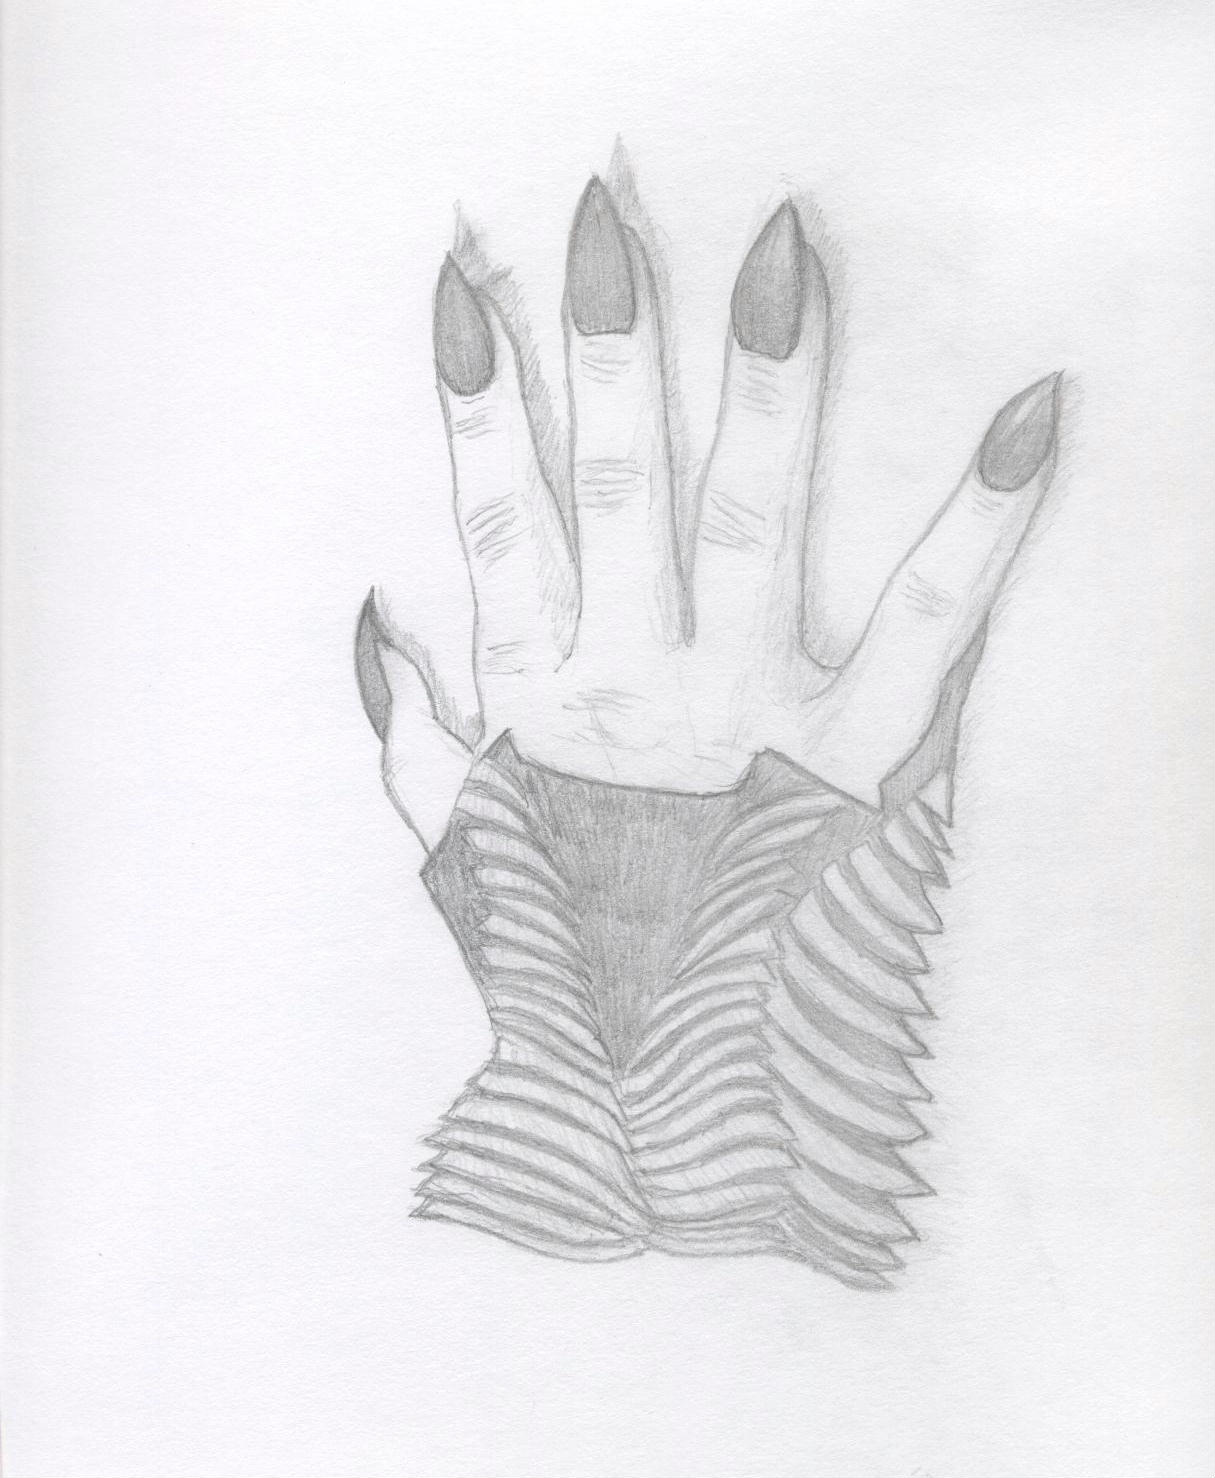 Yulyn's hand by Ran_The_Hyena